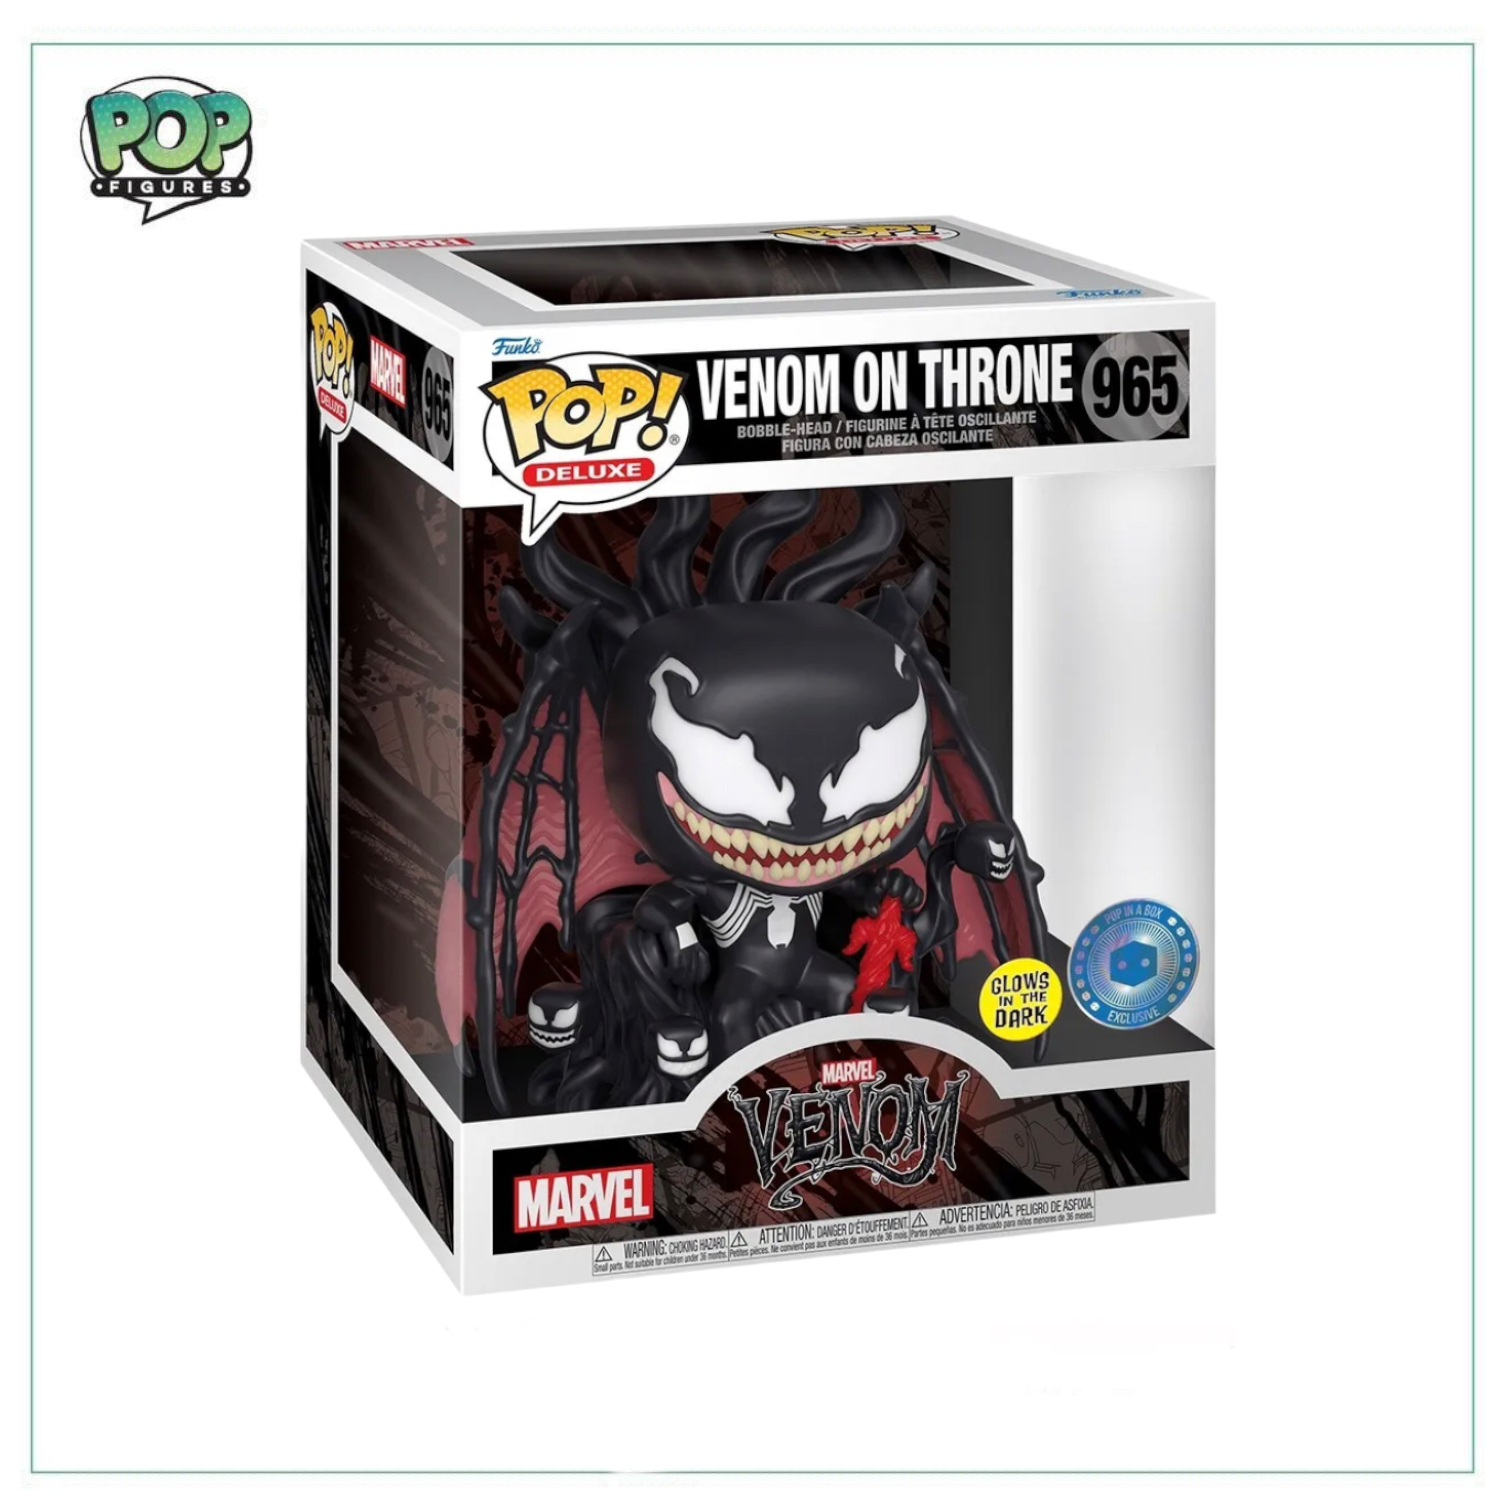 Venom On Throne (Glows In The Dark) #965 Deluxe Funko Pop! Marvel - Pop In A Box Exclusive